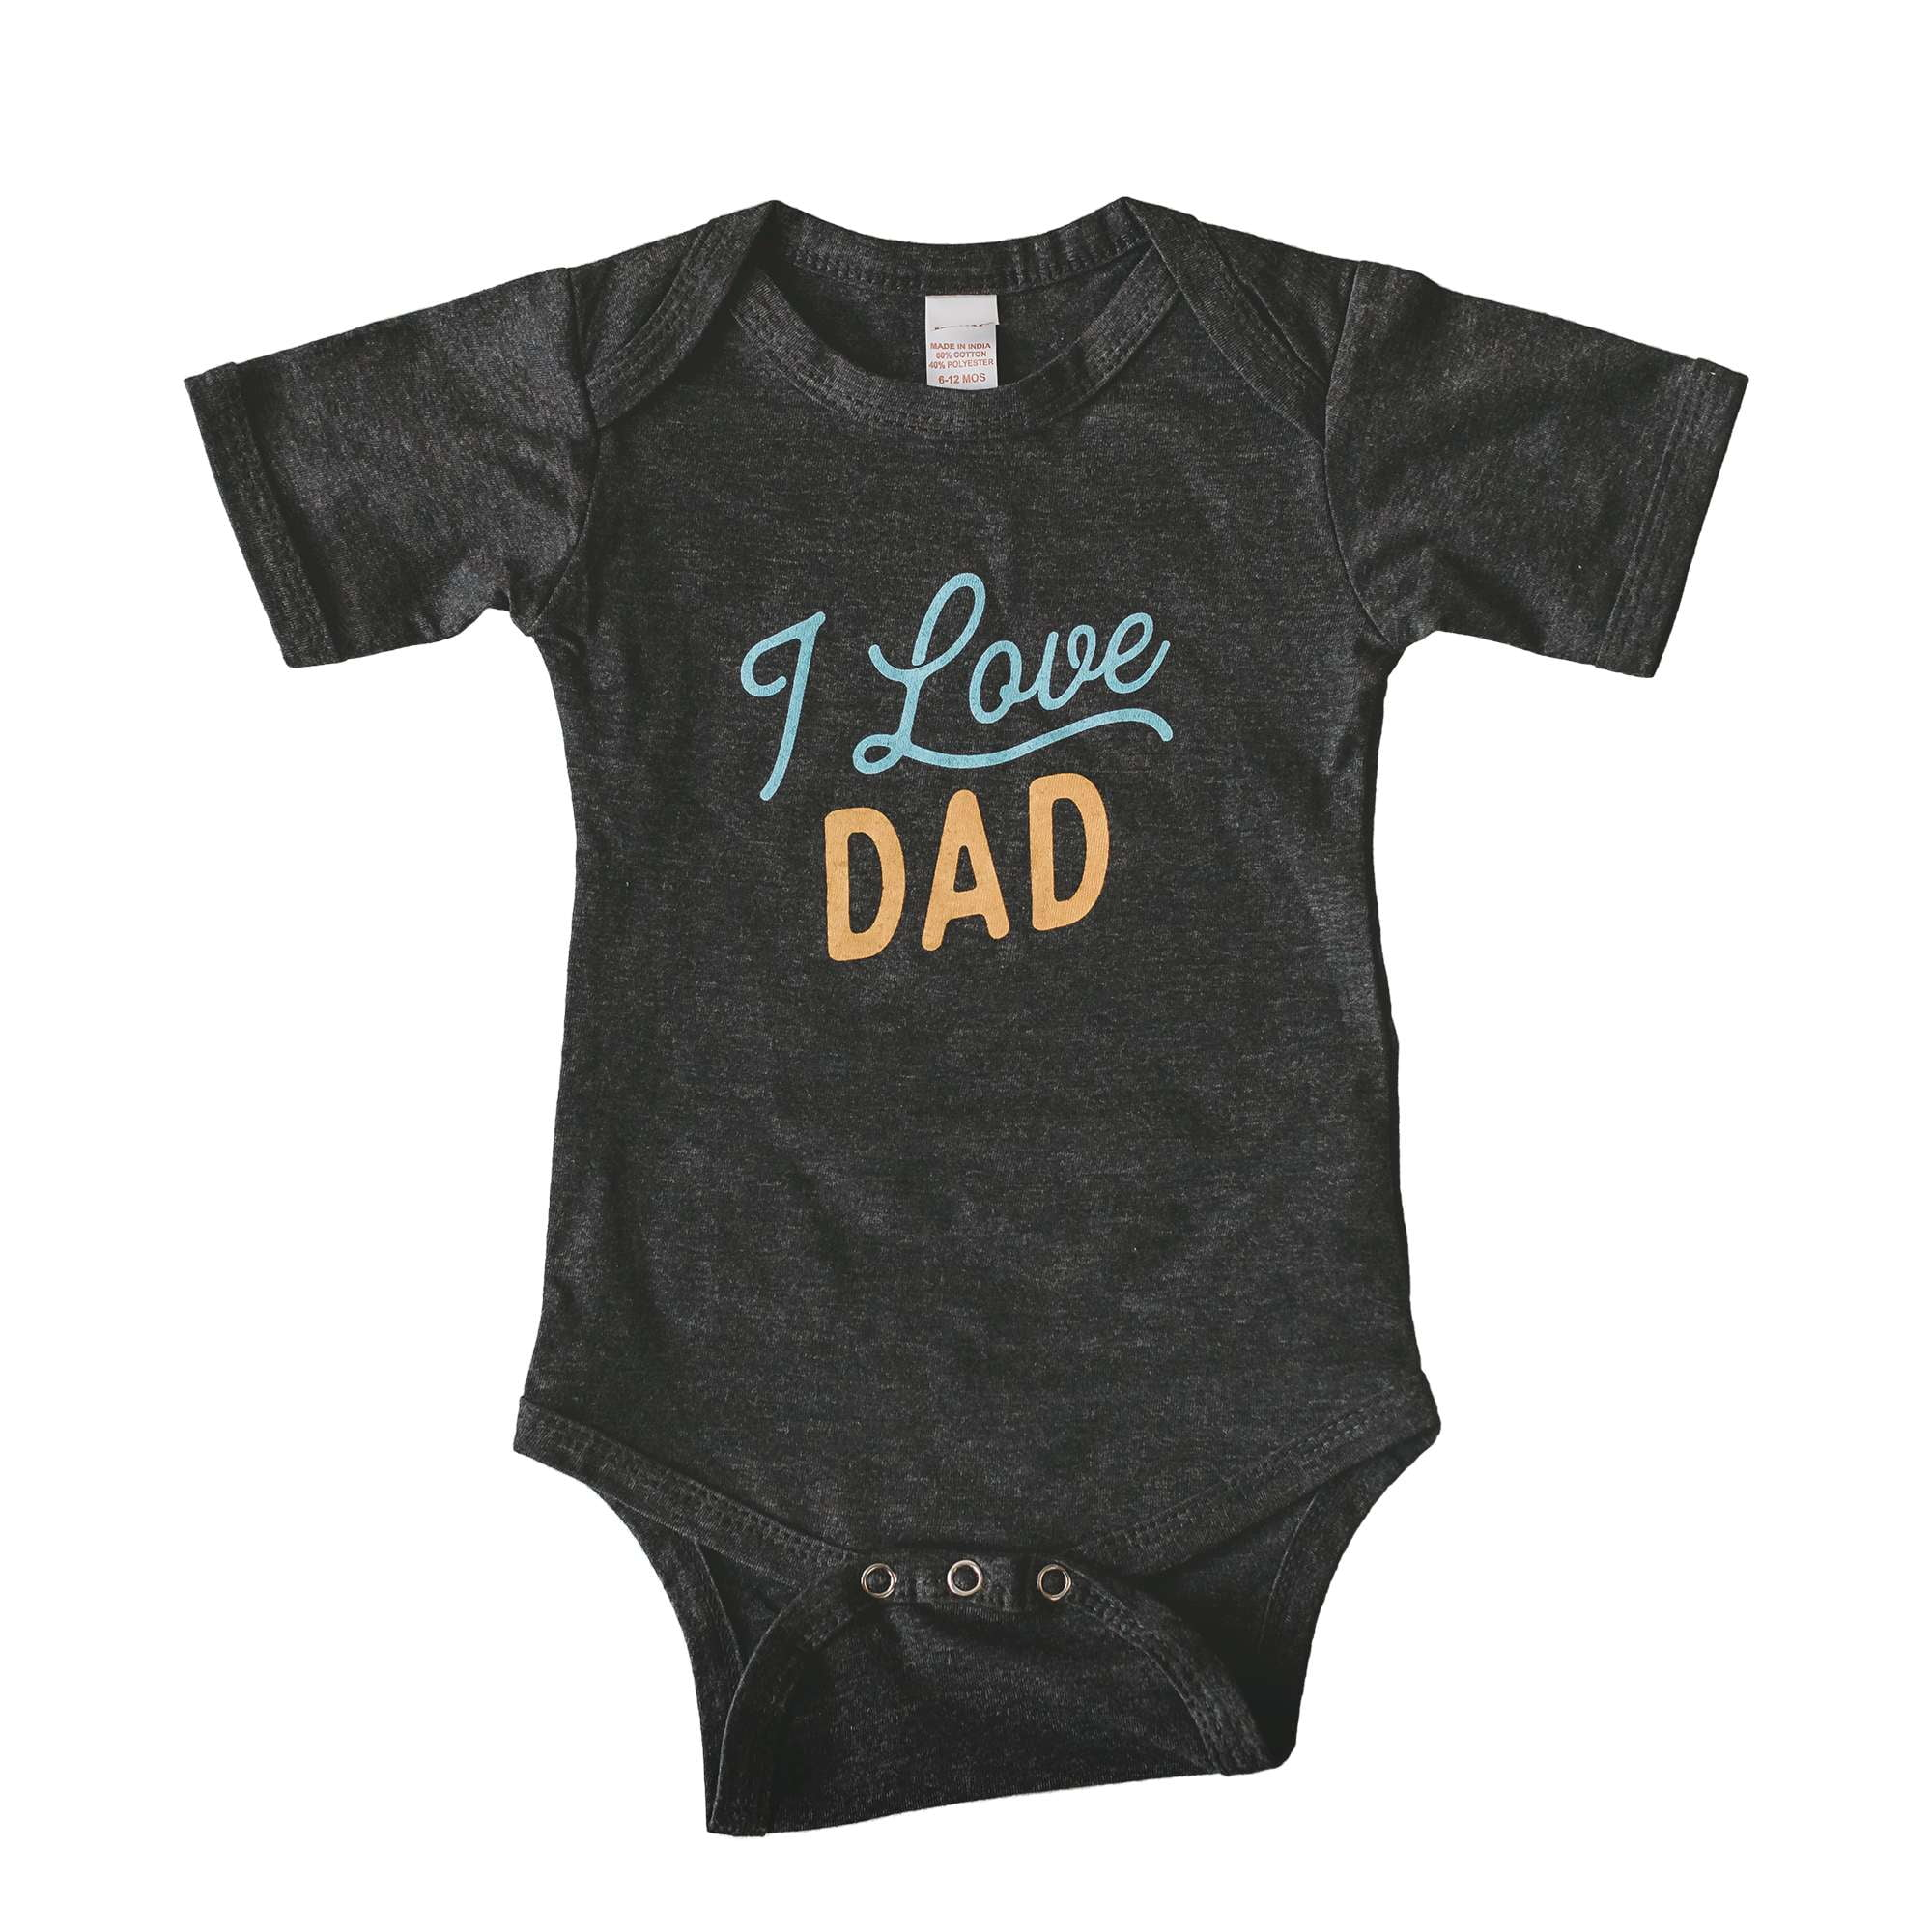 I Love Dad baby bodysuit - Hilland sonconstruction.